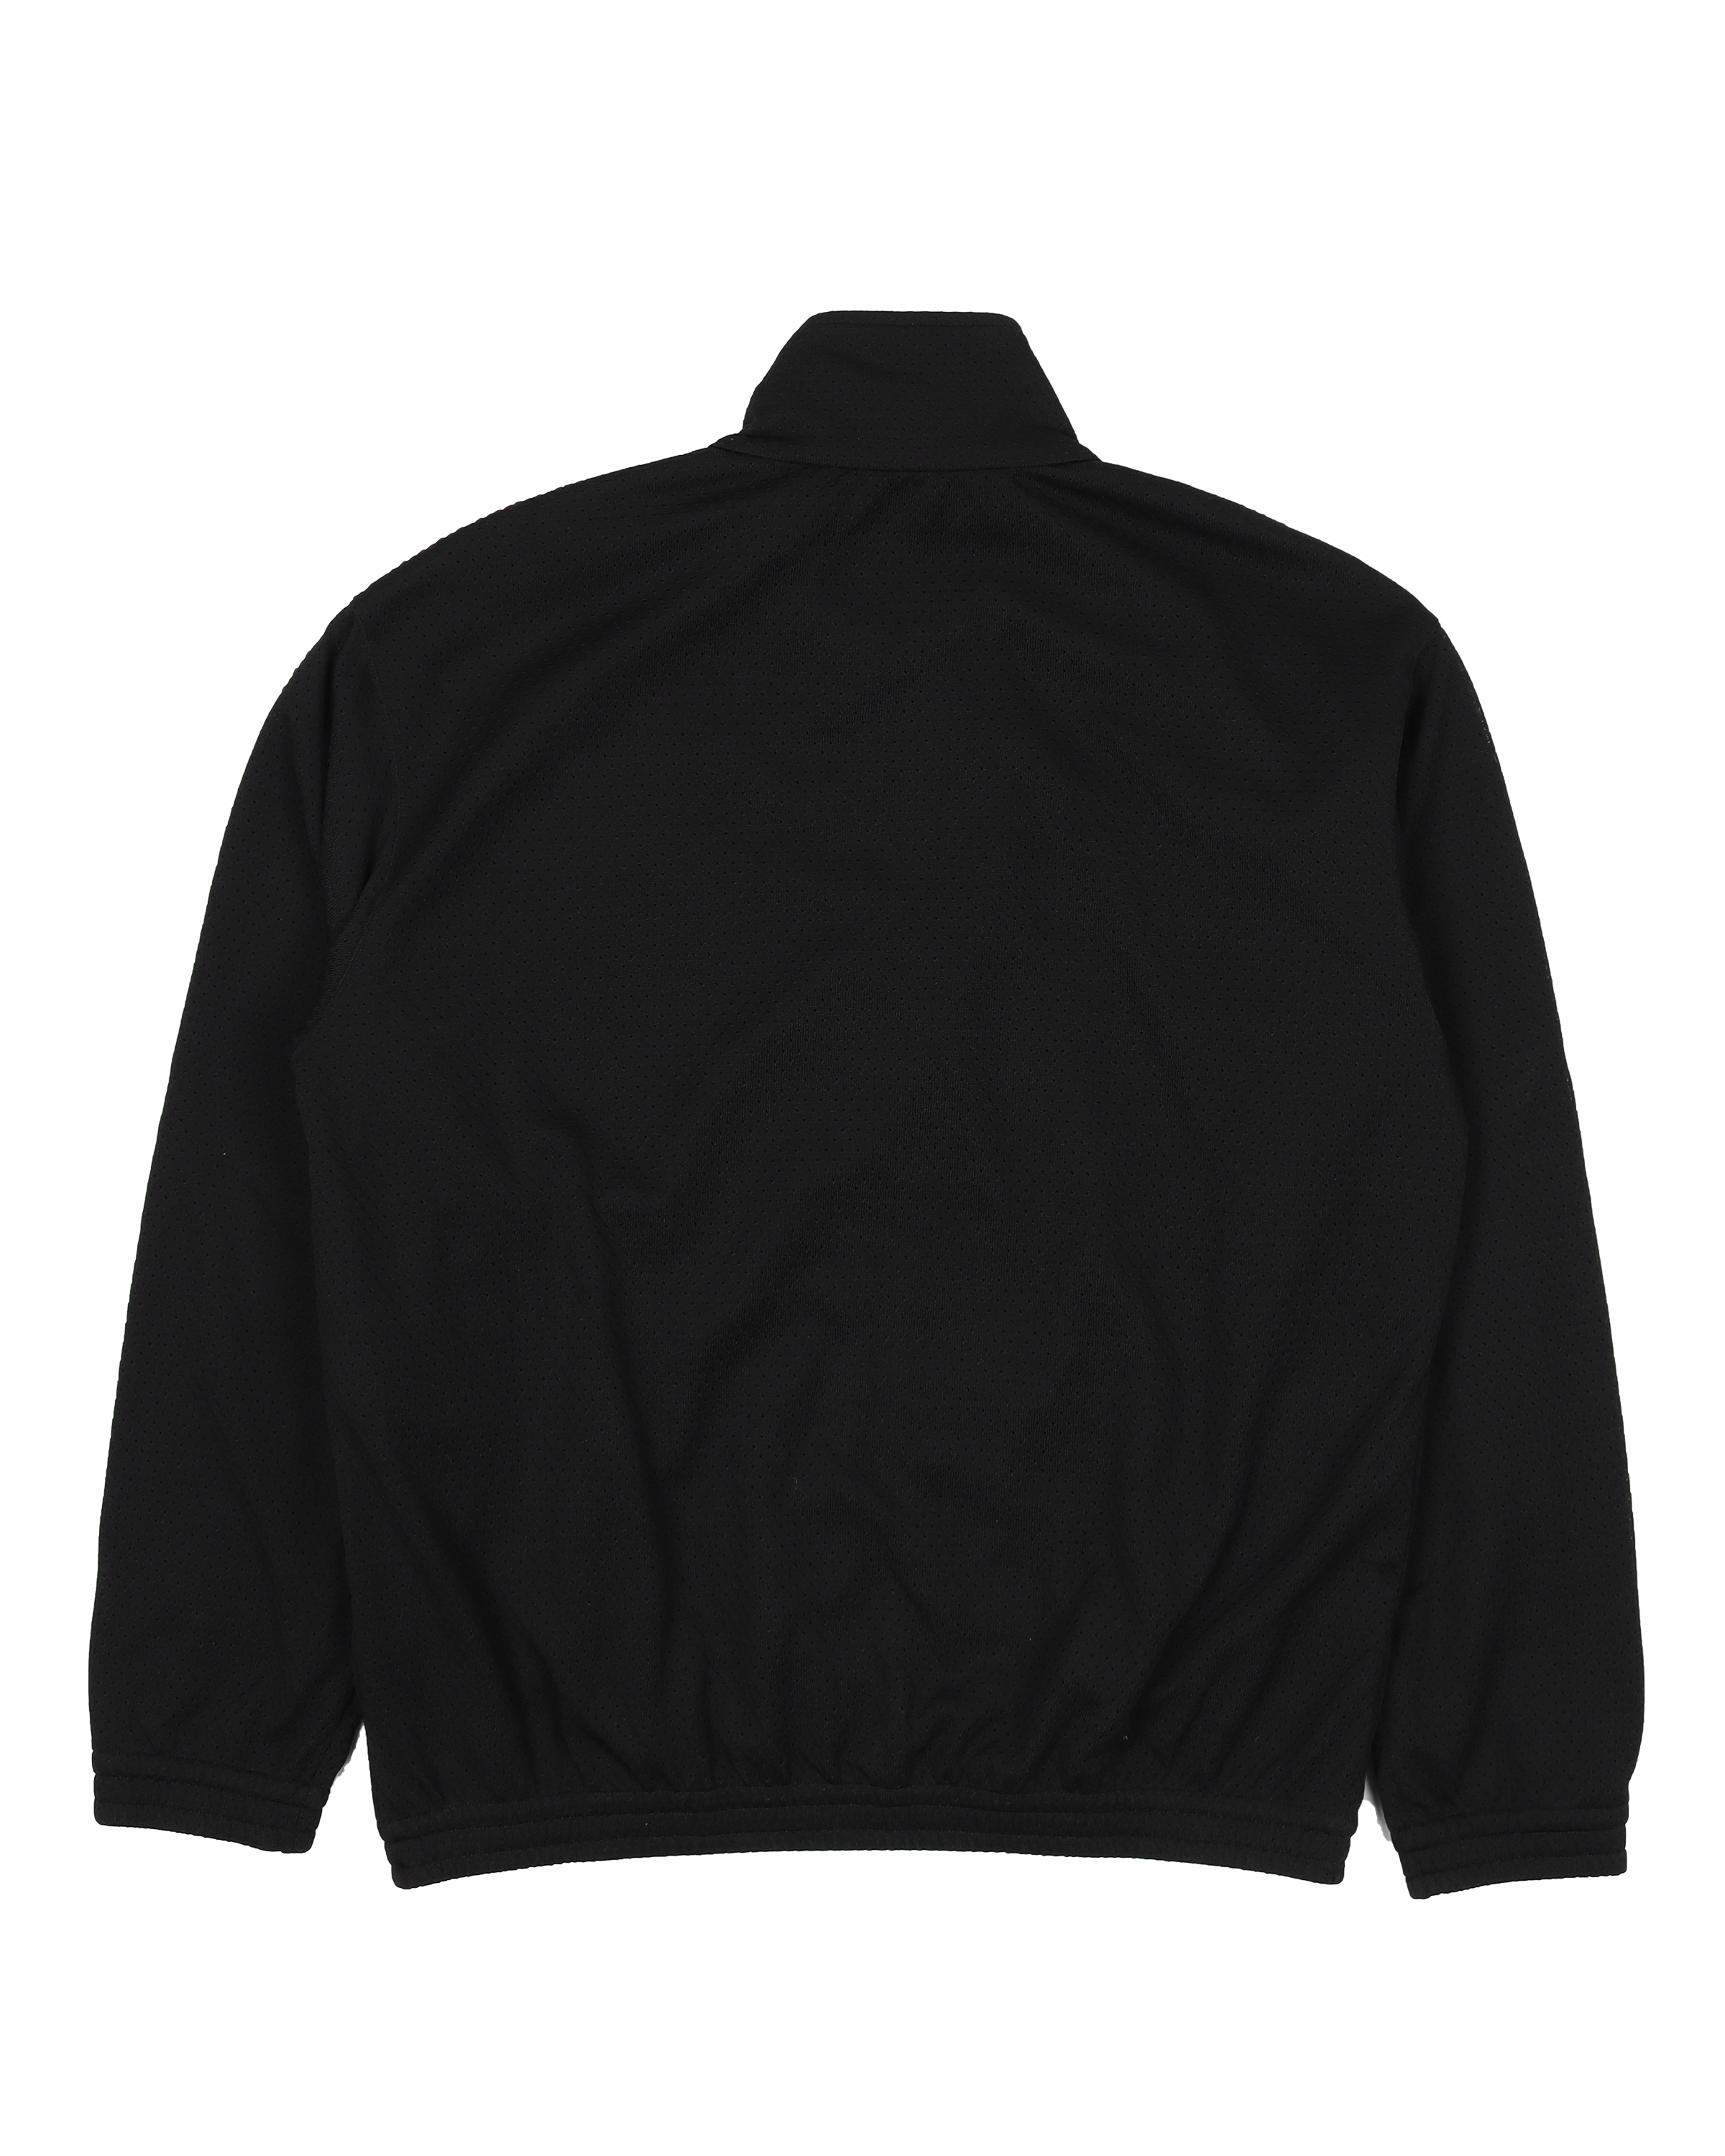 100% Authentic GUCCI Black “Gucci Band” Track Jacket & Shorts Set Size: M